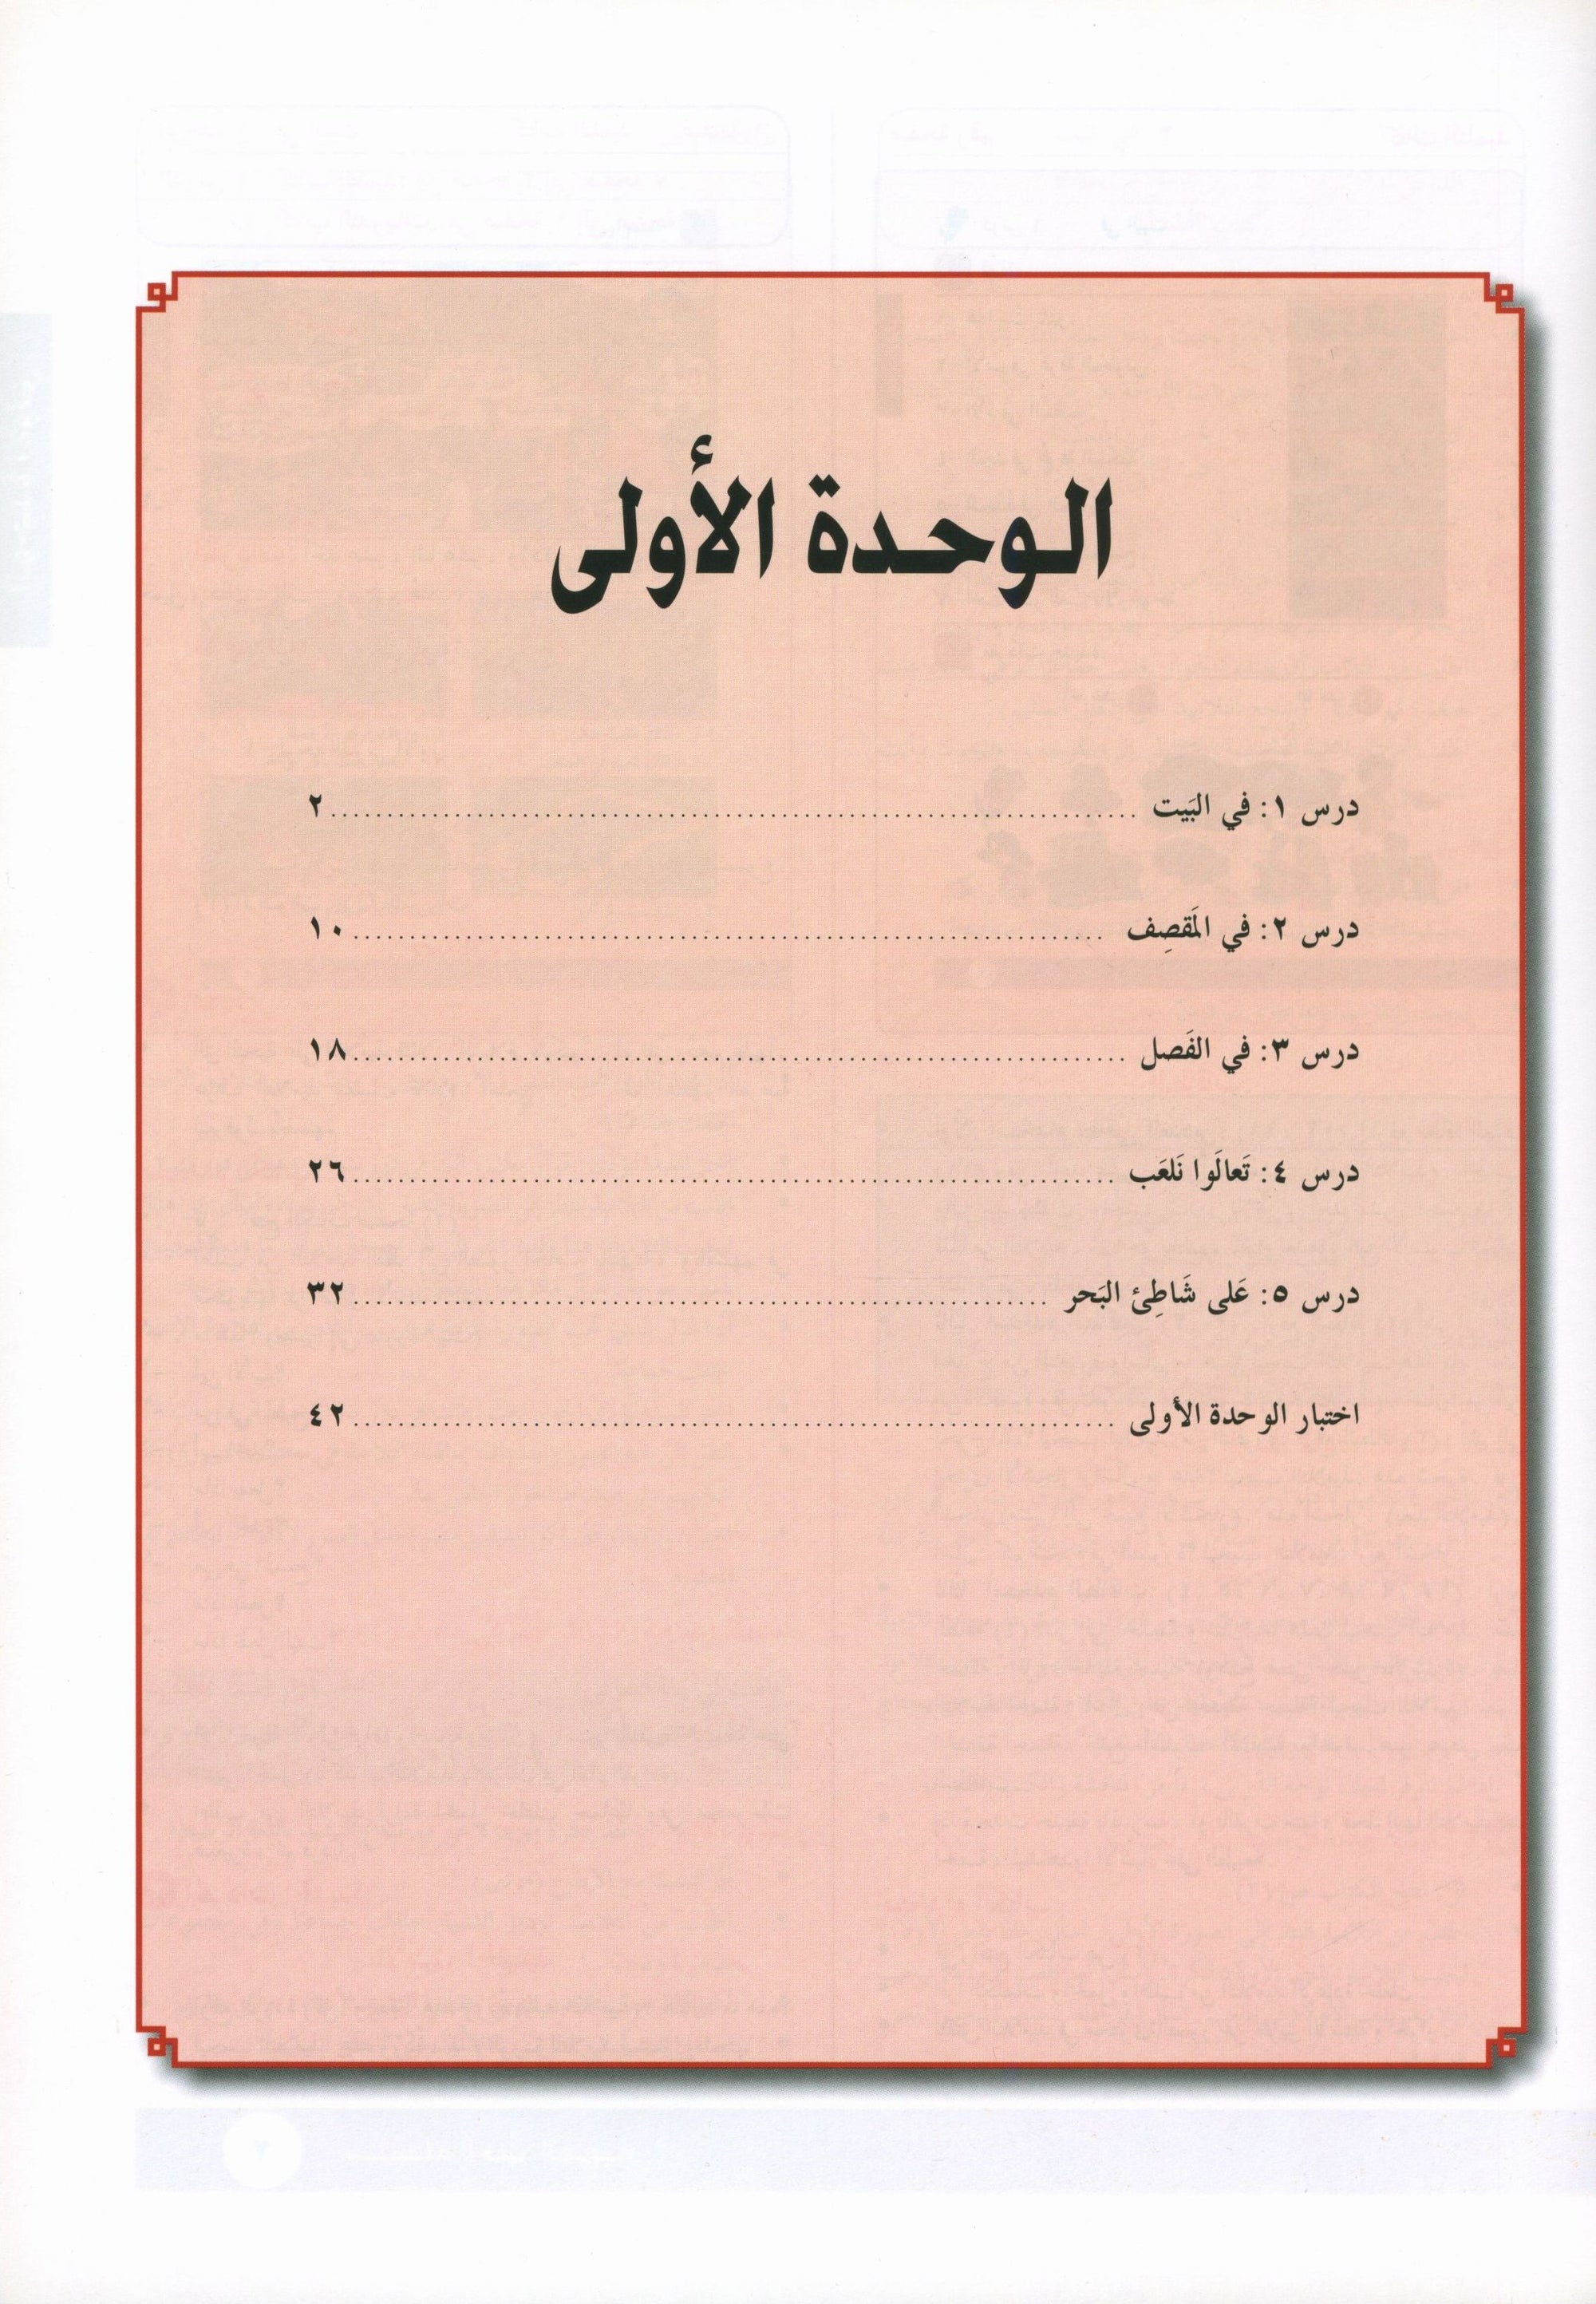 I Love Arabic Teacher Book Level 2 أحب العربية